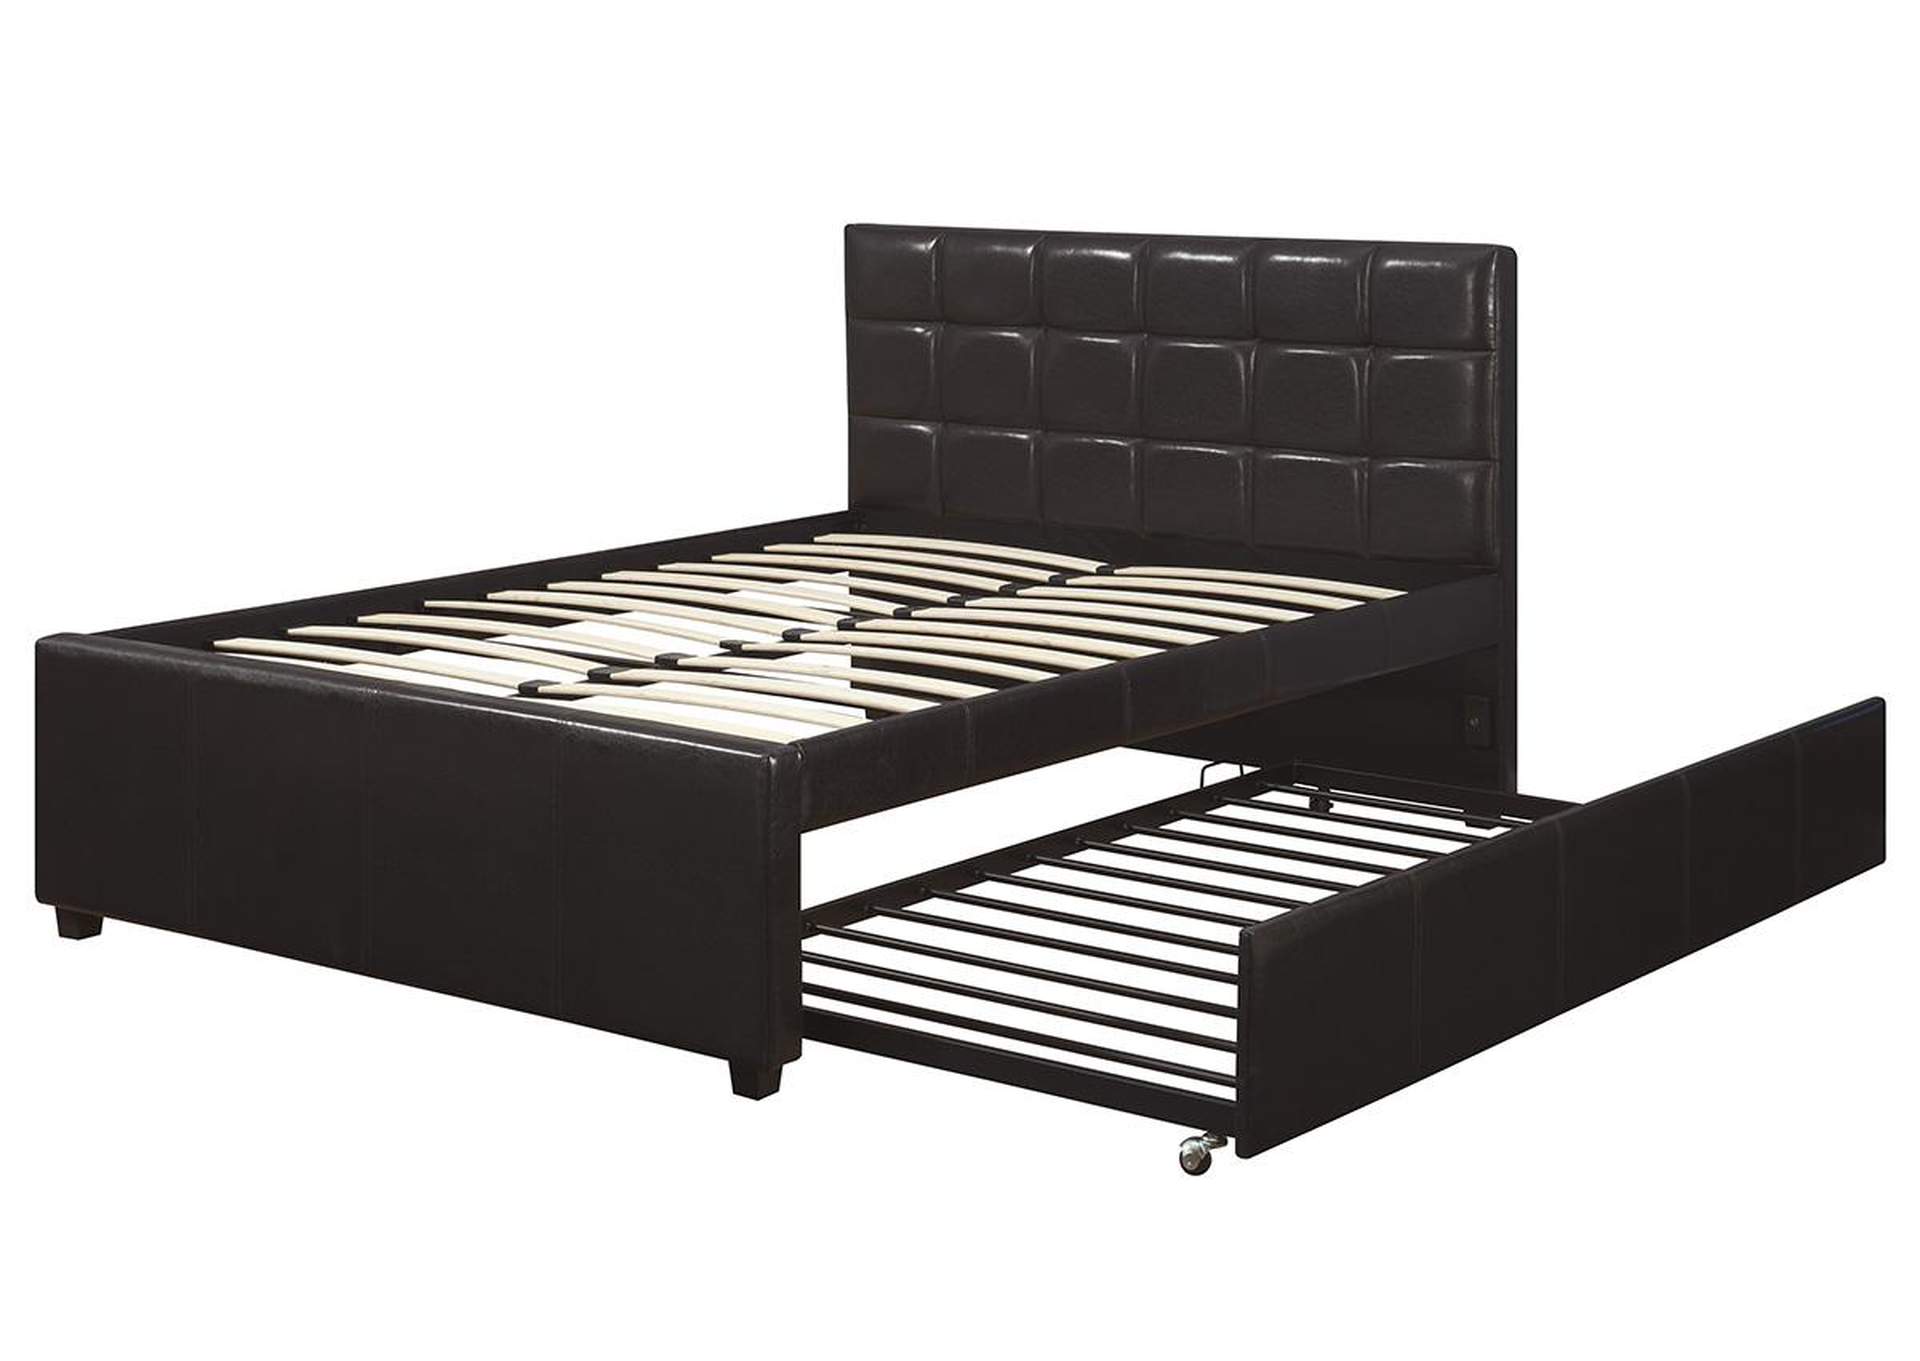 Full Size Bed w/ Trundle,Poundex